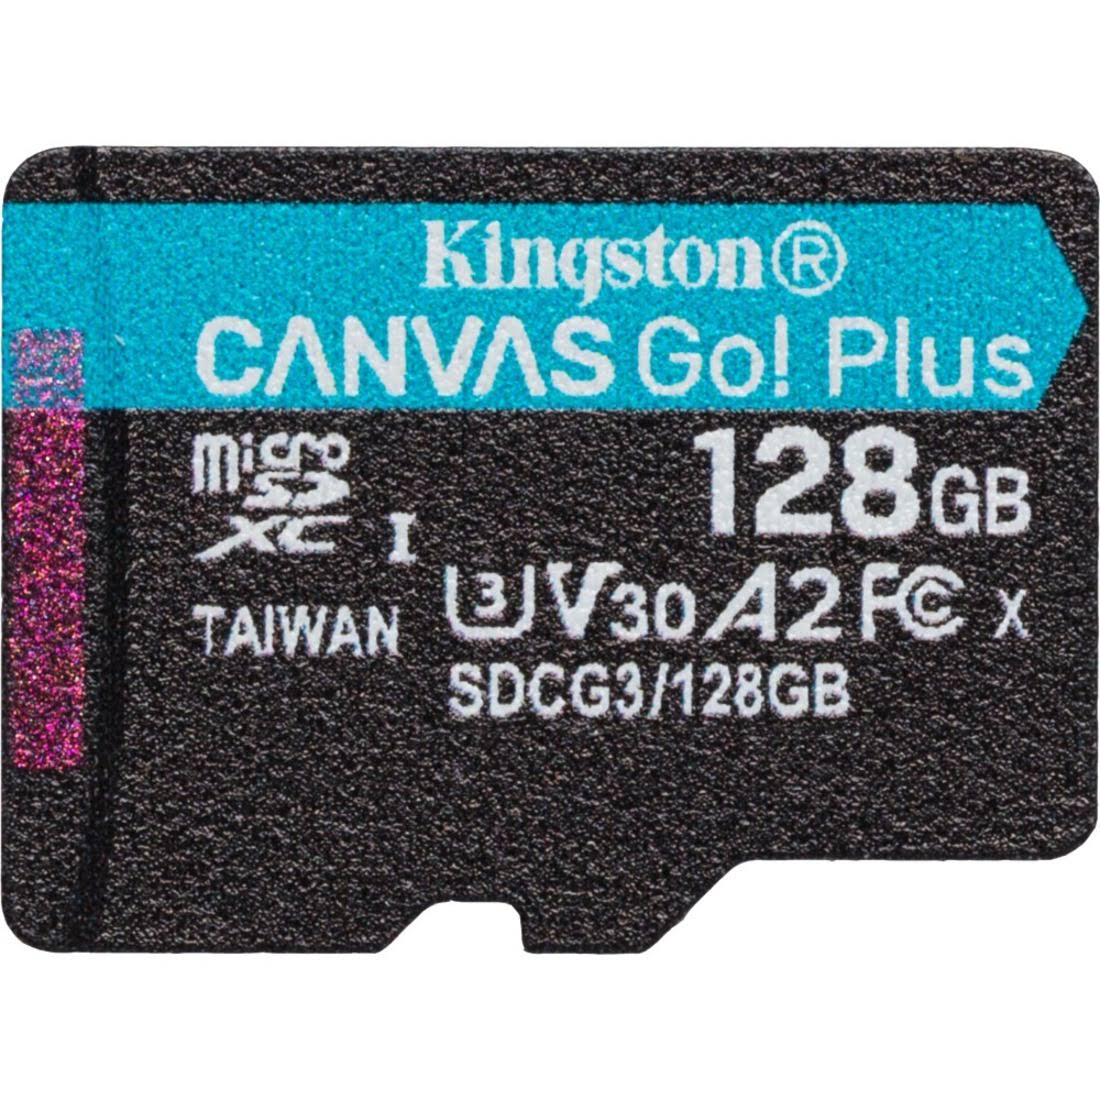 Kingston Canvas Go! Plus - flash memory card - 128 Gb - microsdxc Uhs-